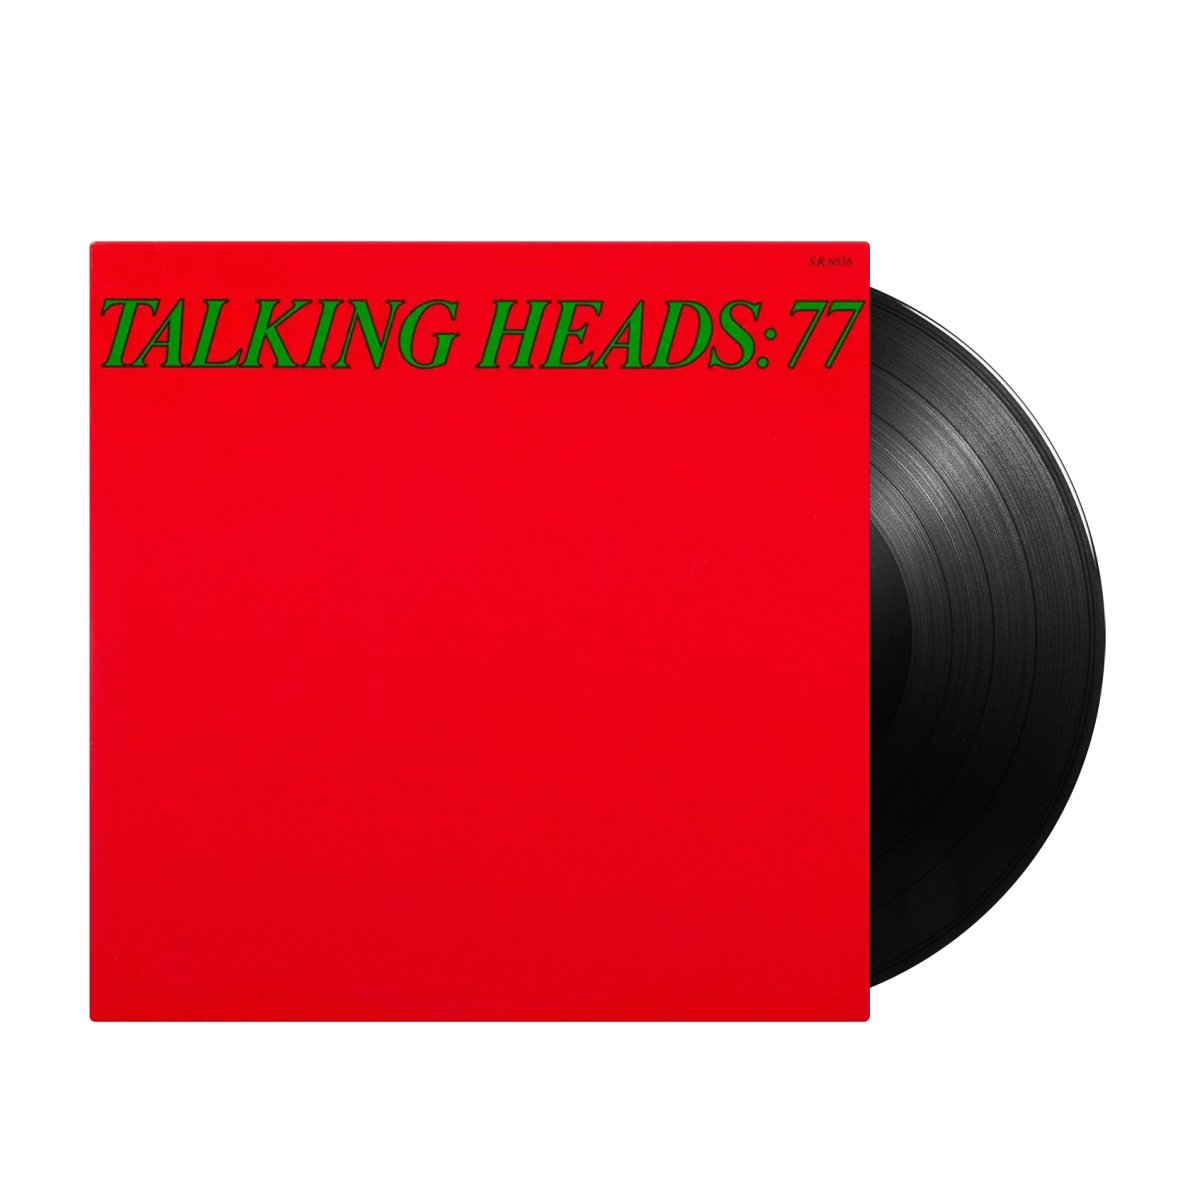 Talking Heads - Talking Heads: 77 - Inner Ocean Records